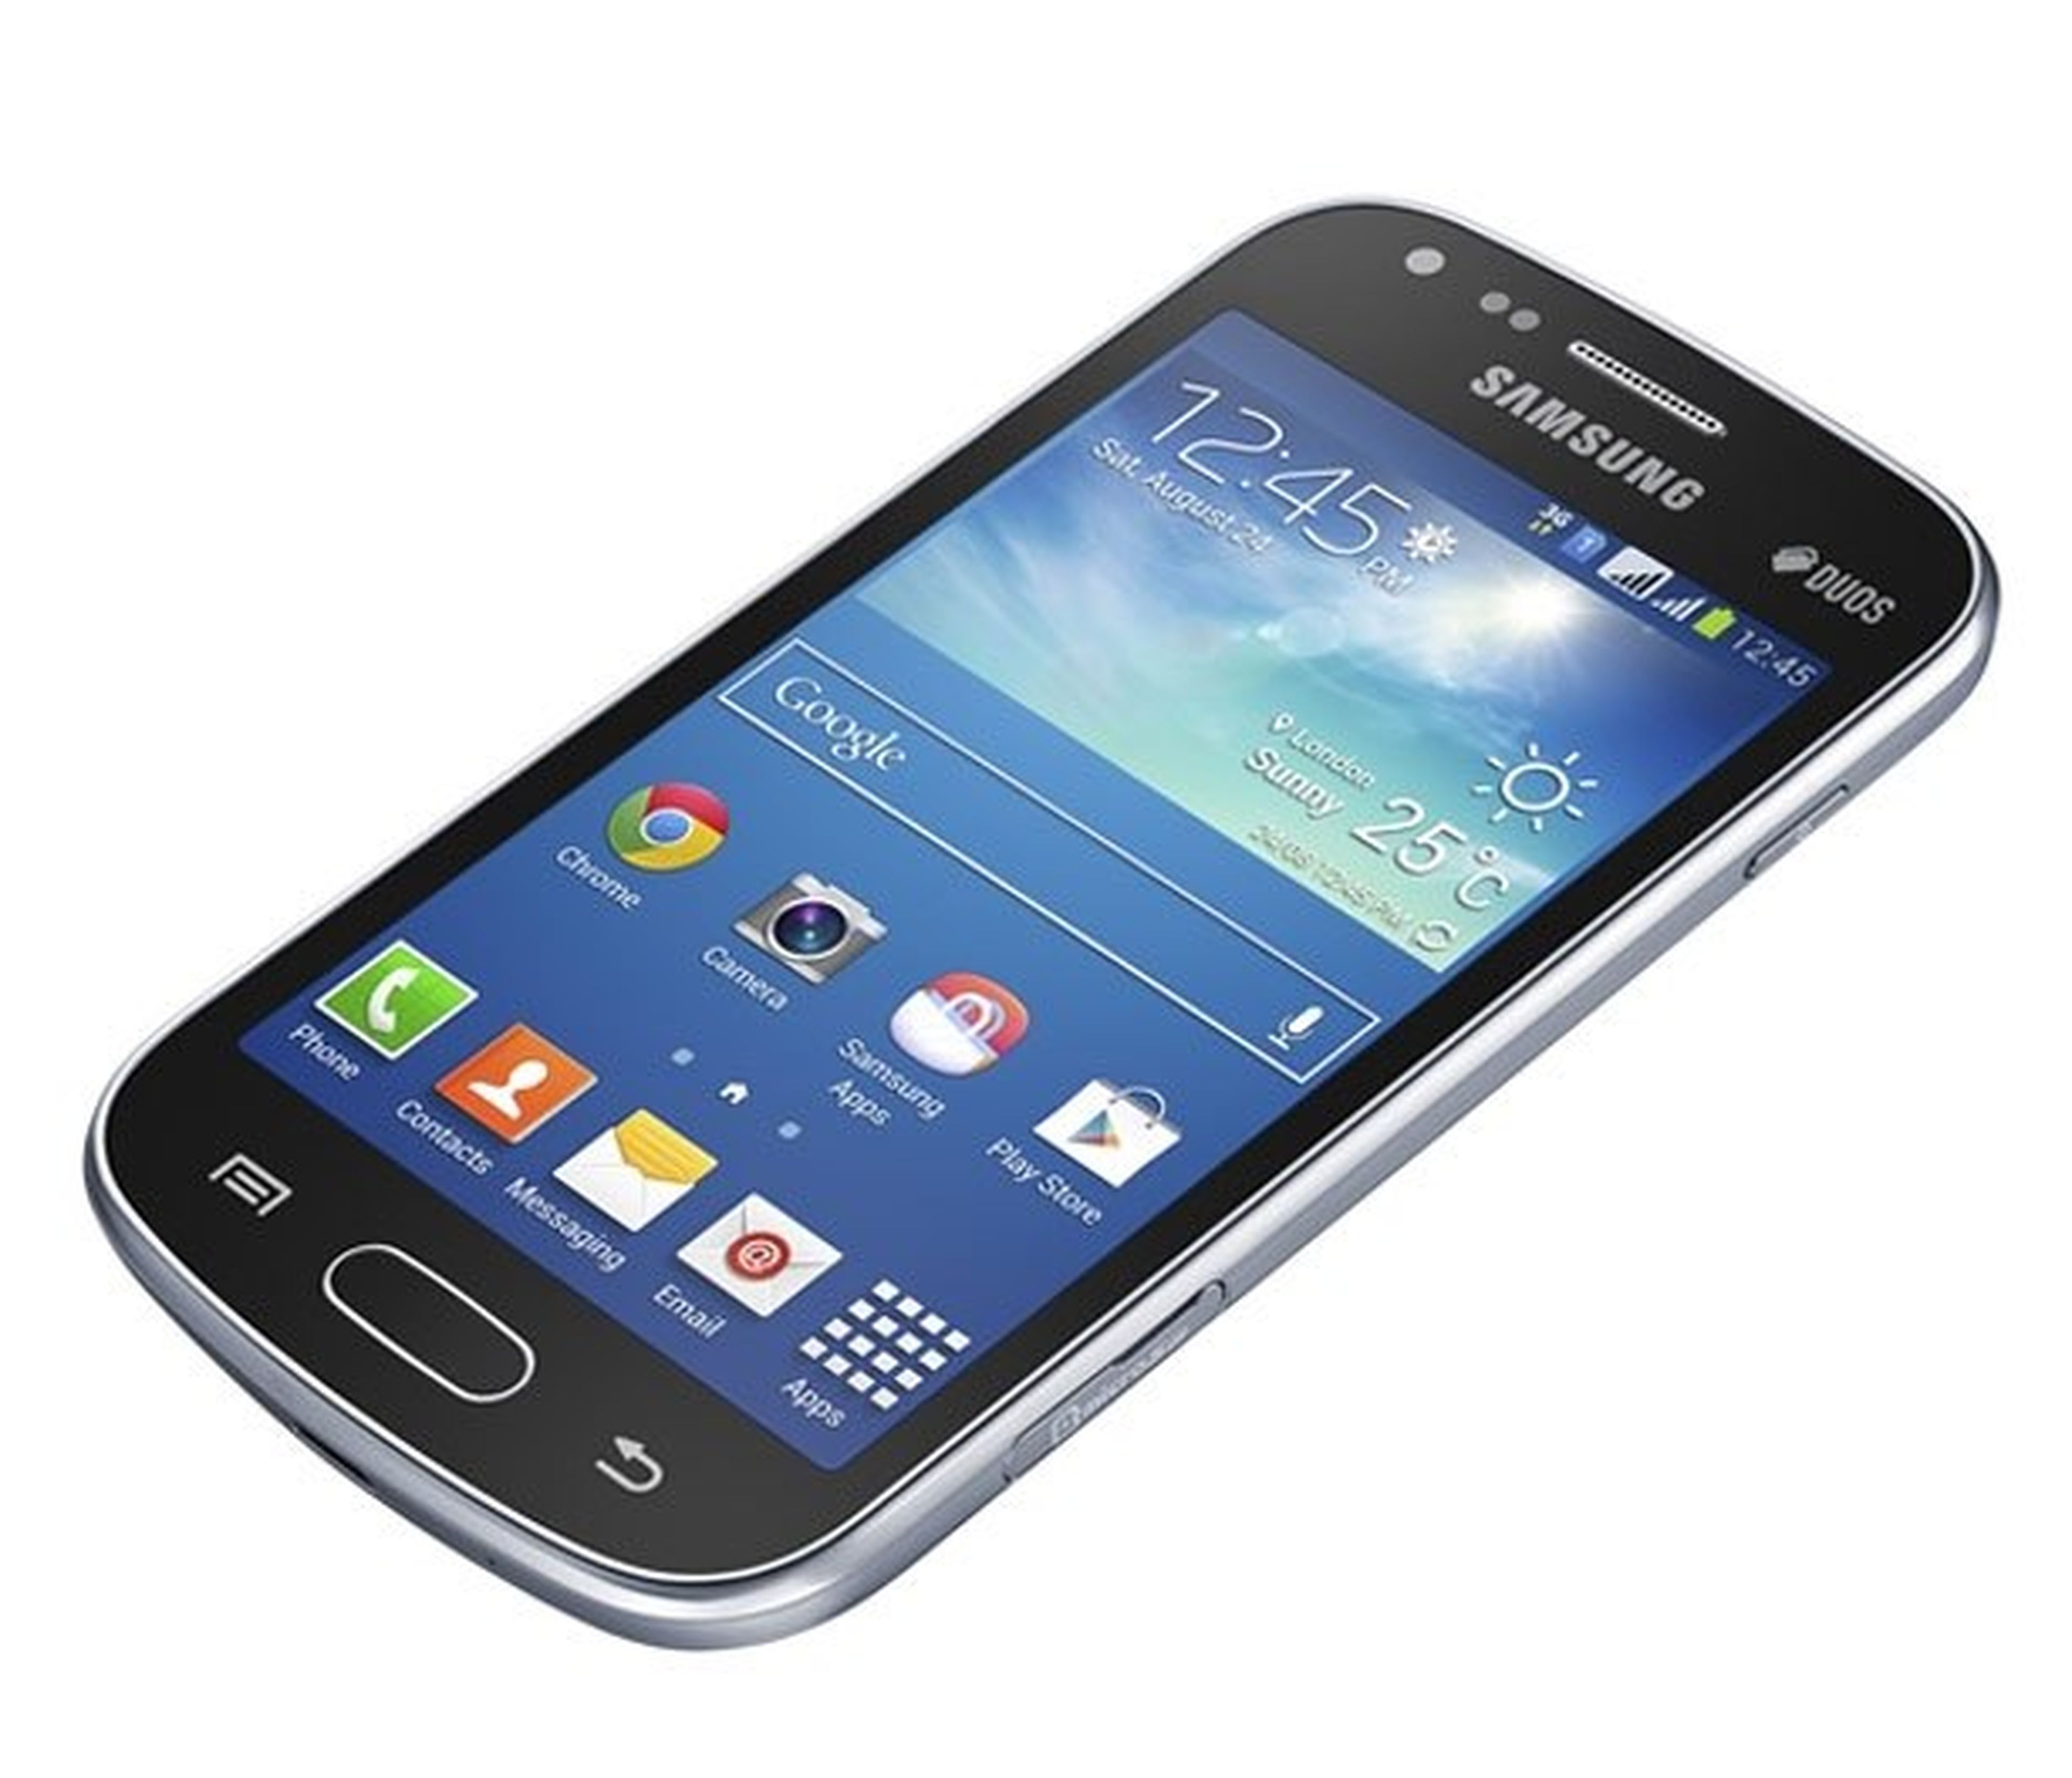 Samsung Galaxy S Duos 2